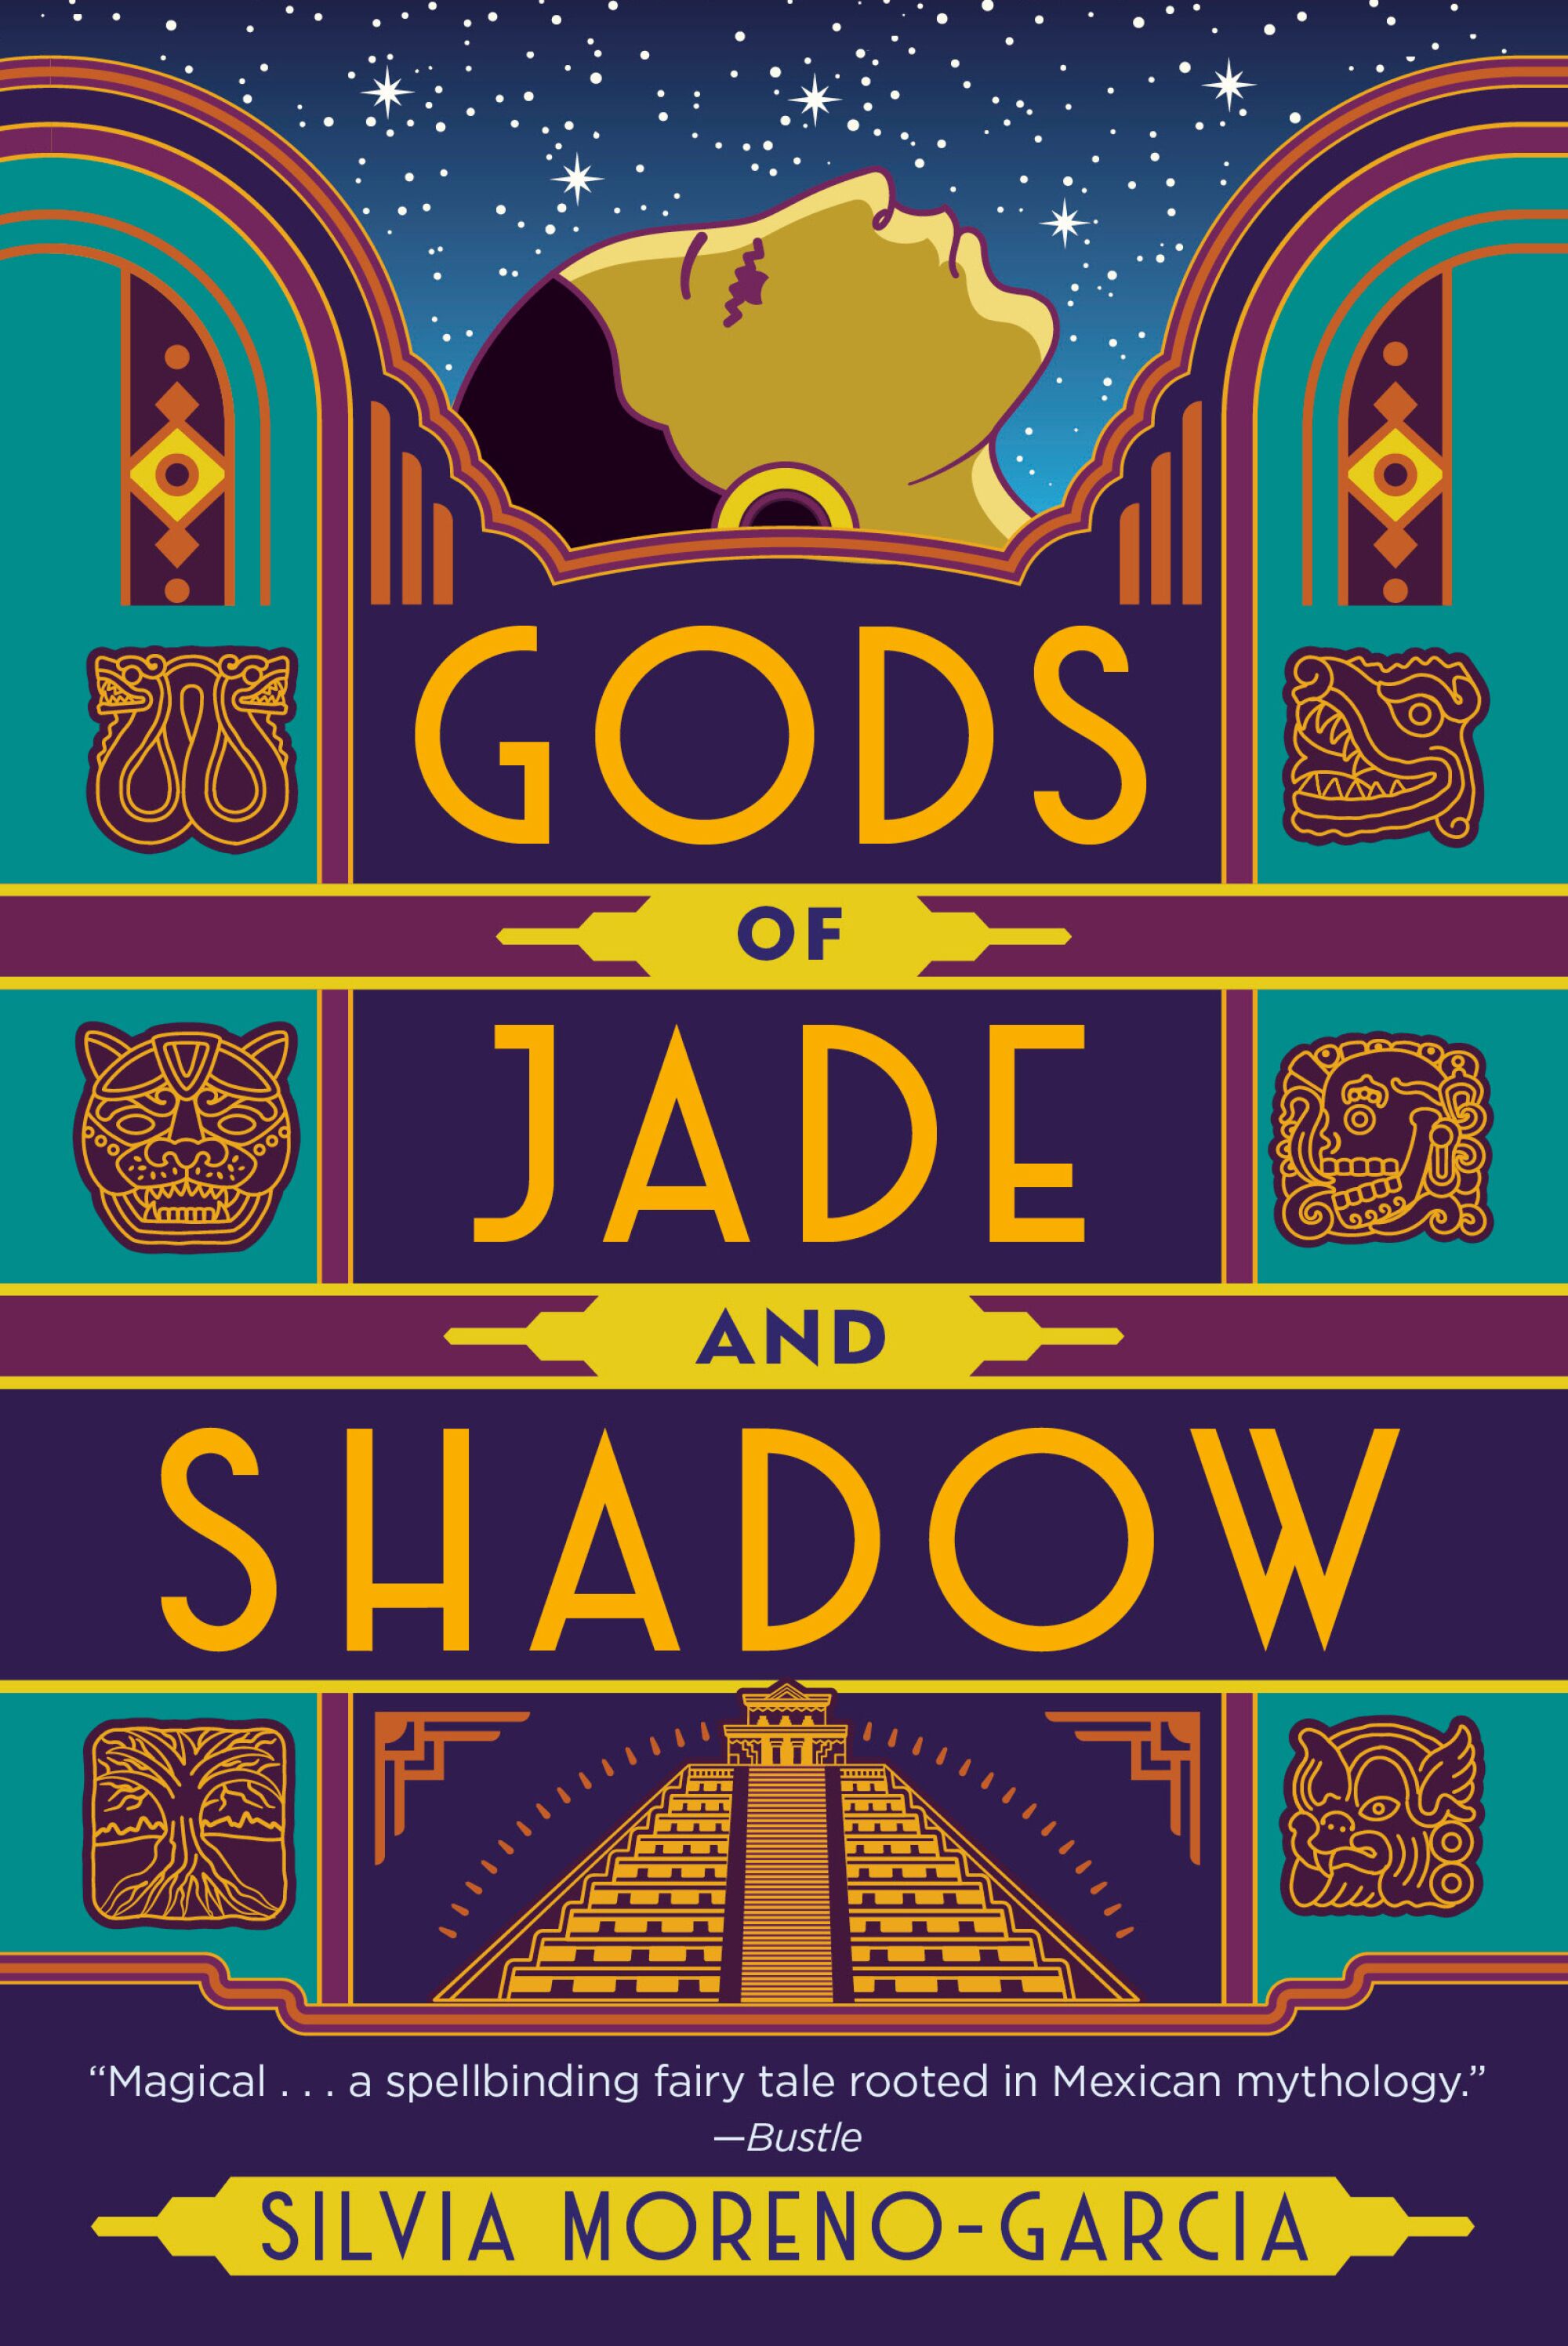 "Gods of Jade and Shadow" by Silvia Moreno-Garcia